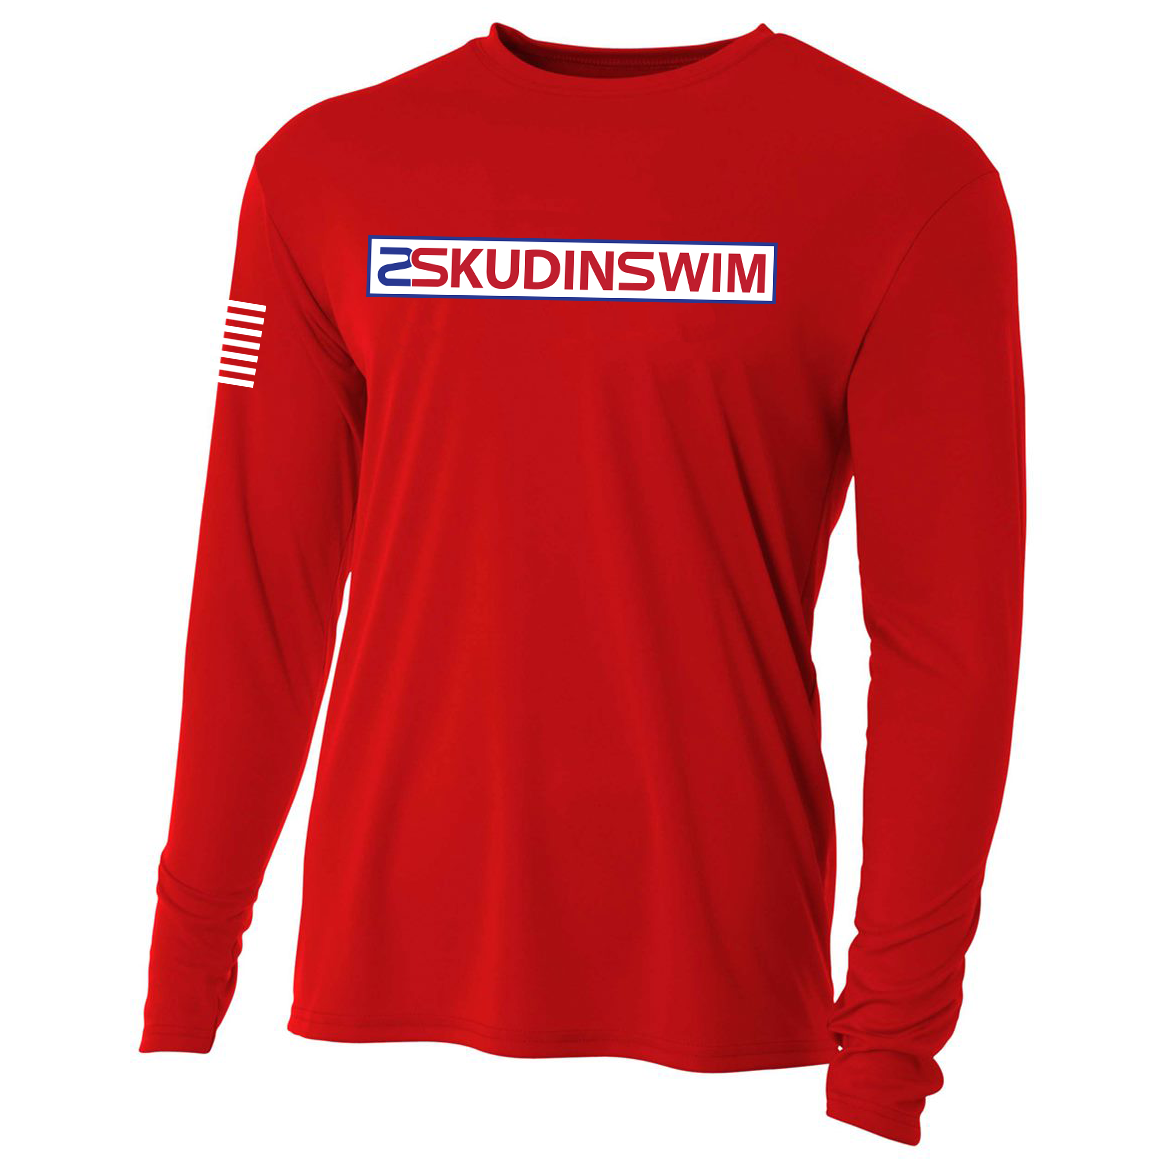 Skudin Swim A4 Cooling Performance L/S Crew